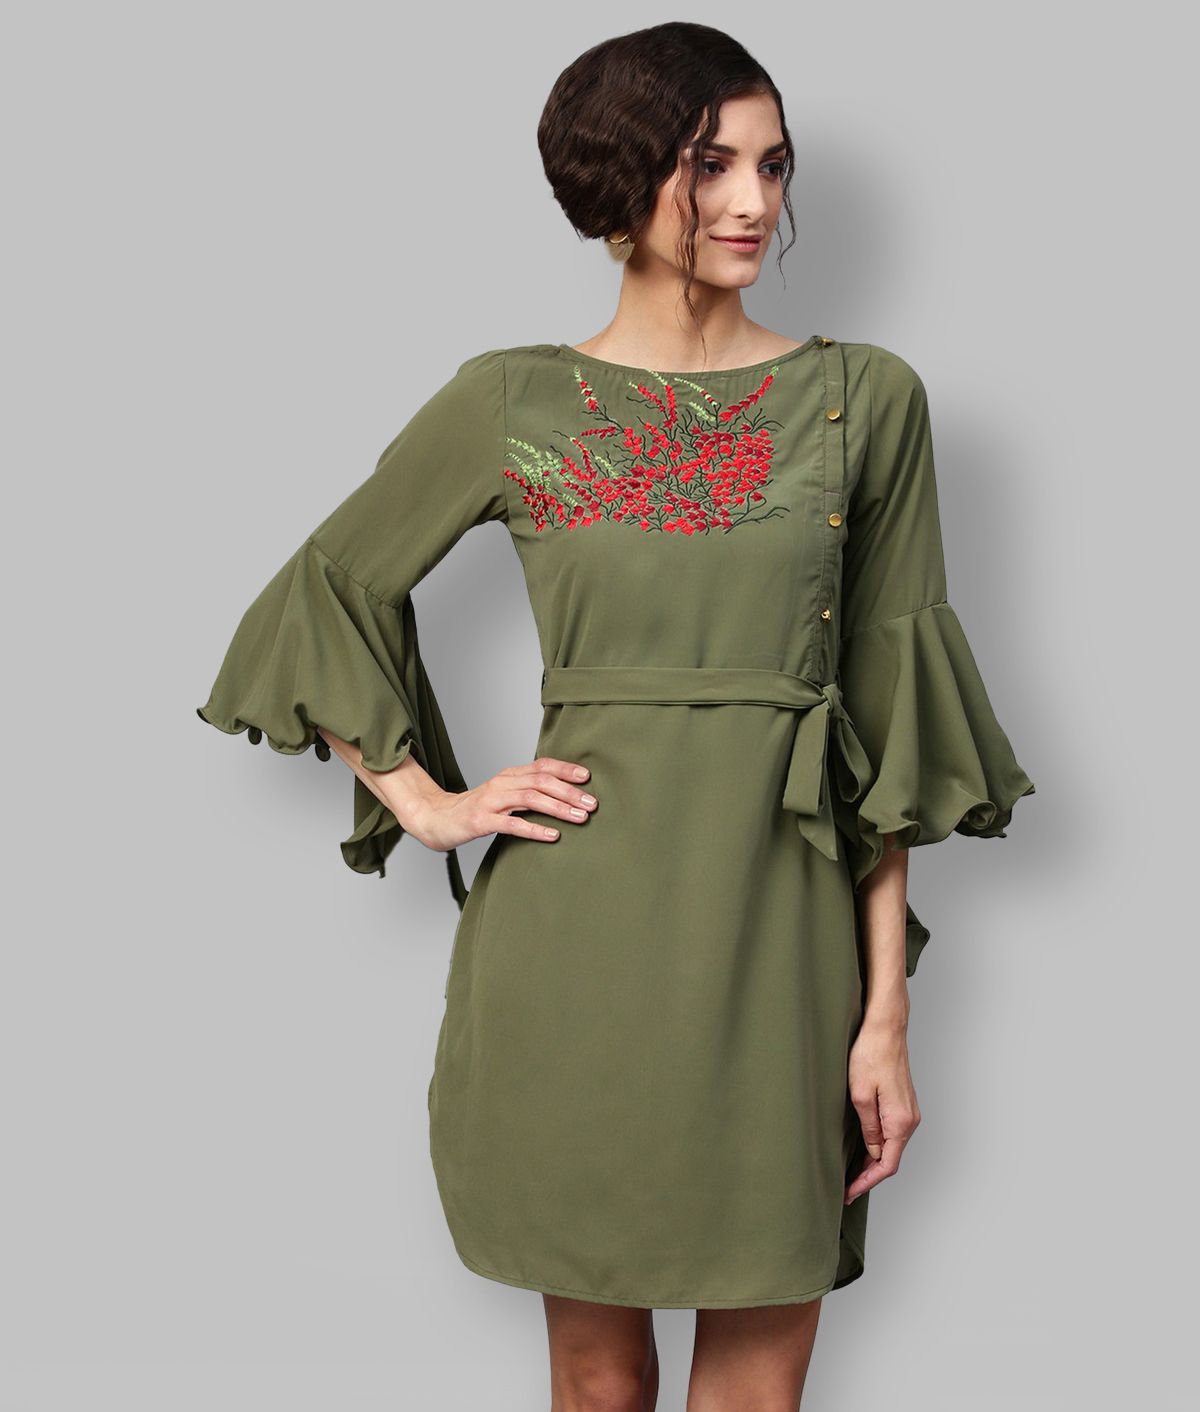     			Zima Leto Polyester Green Sheath Dress - Single